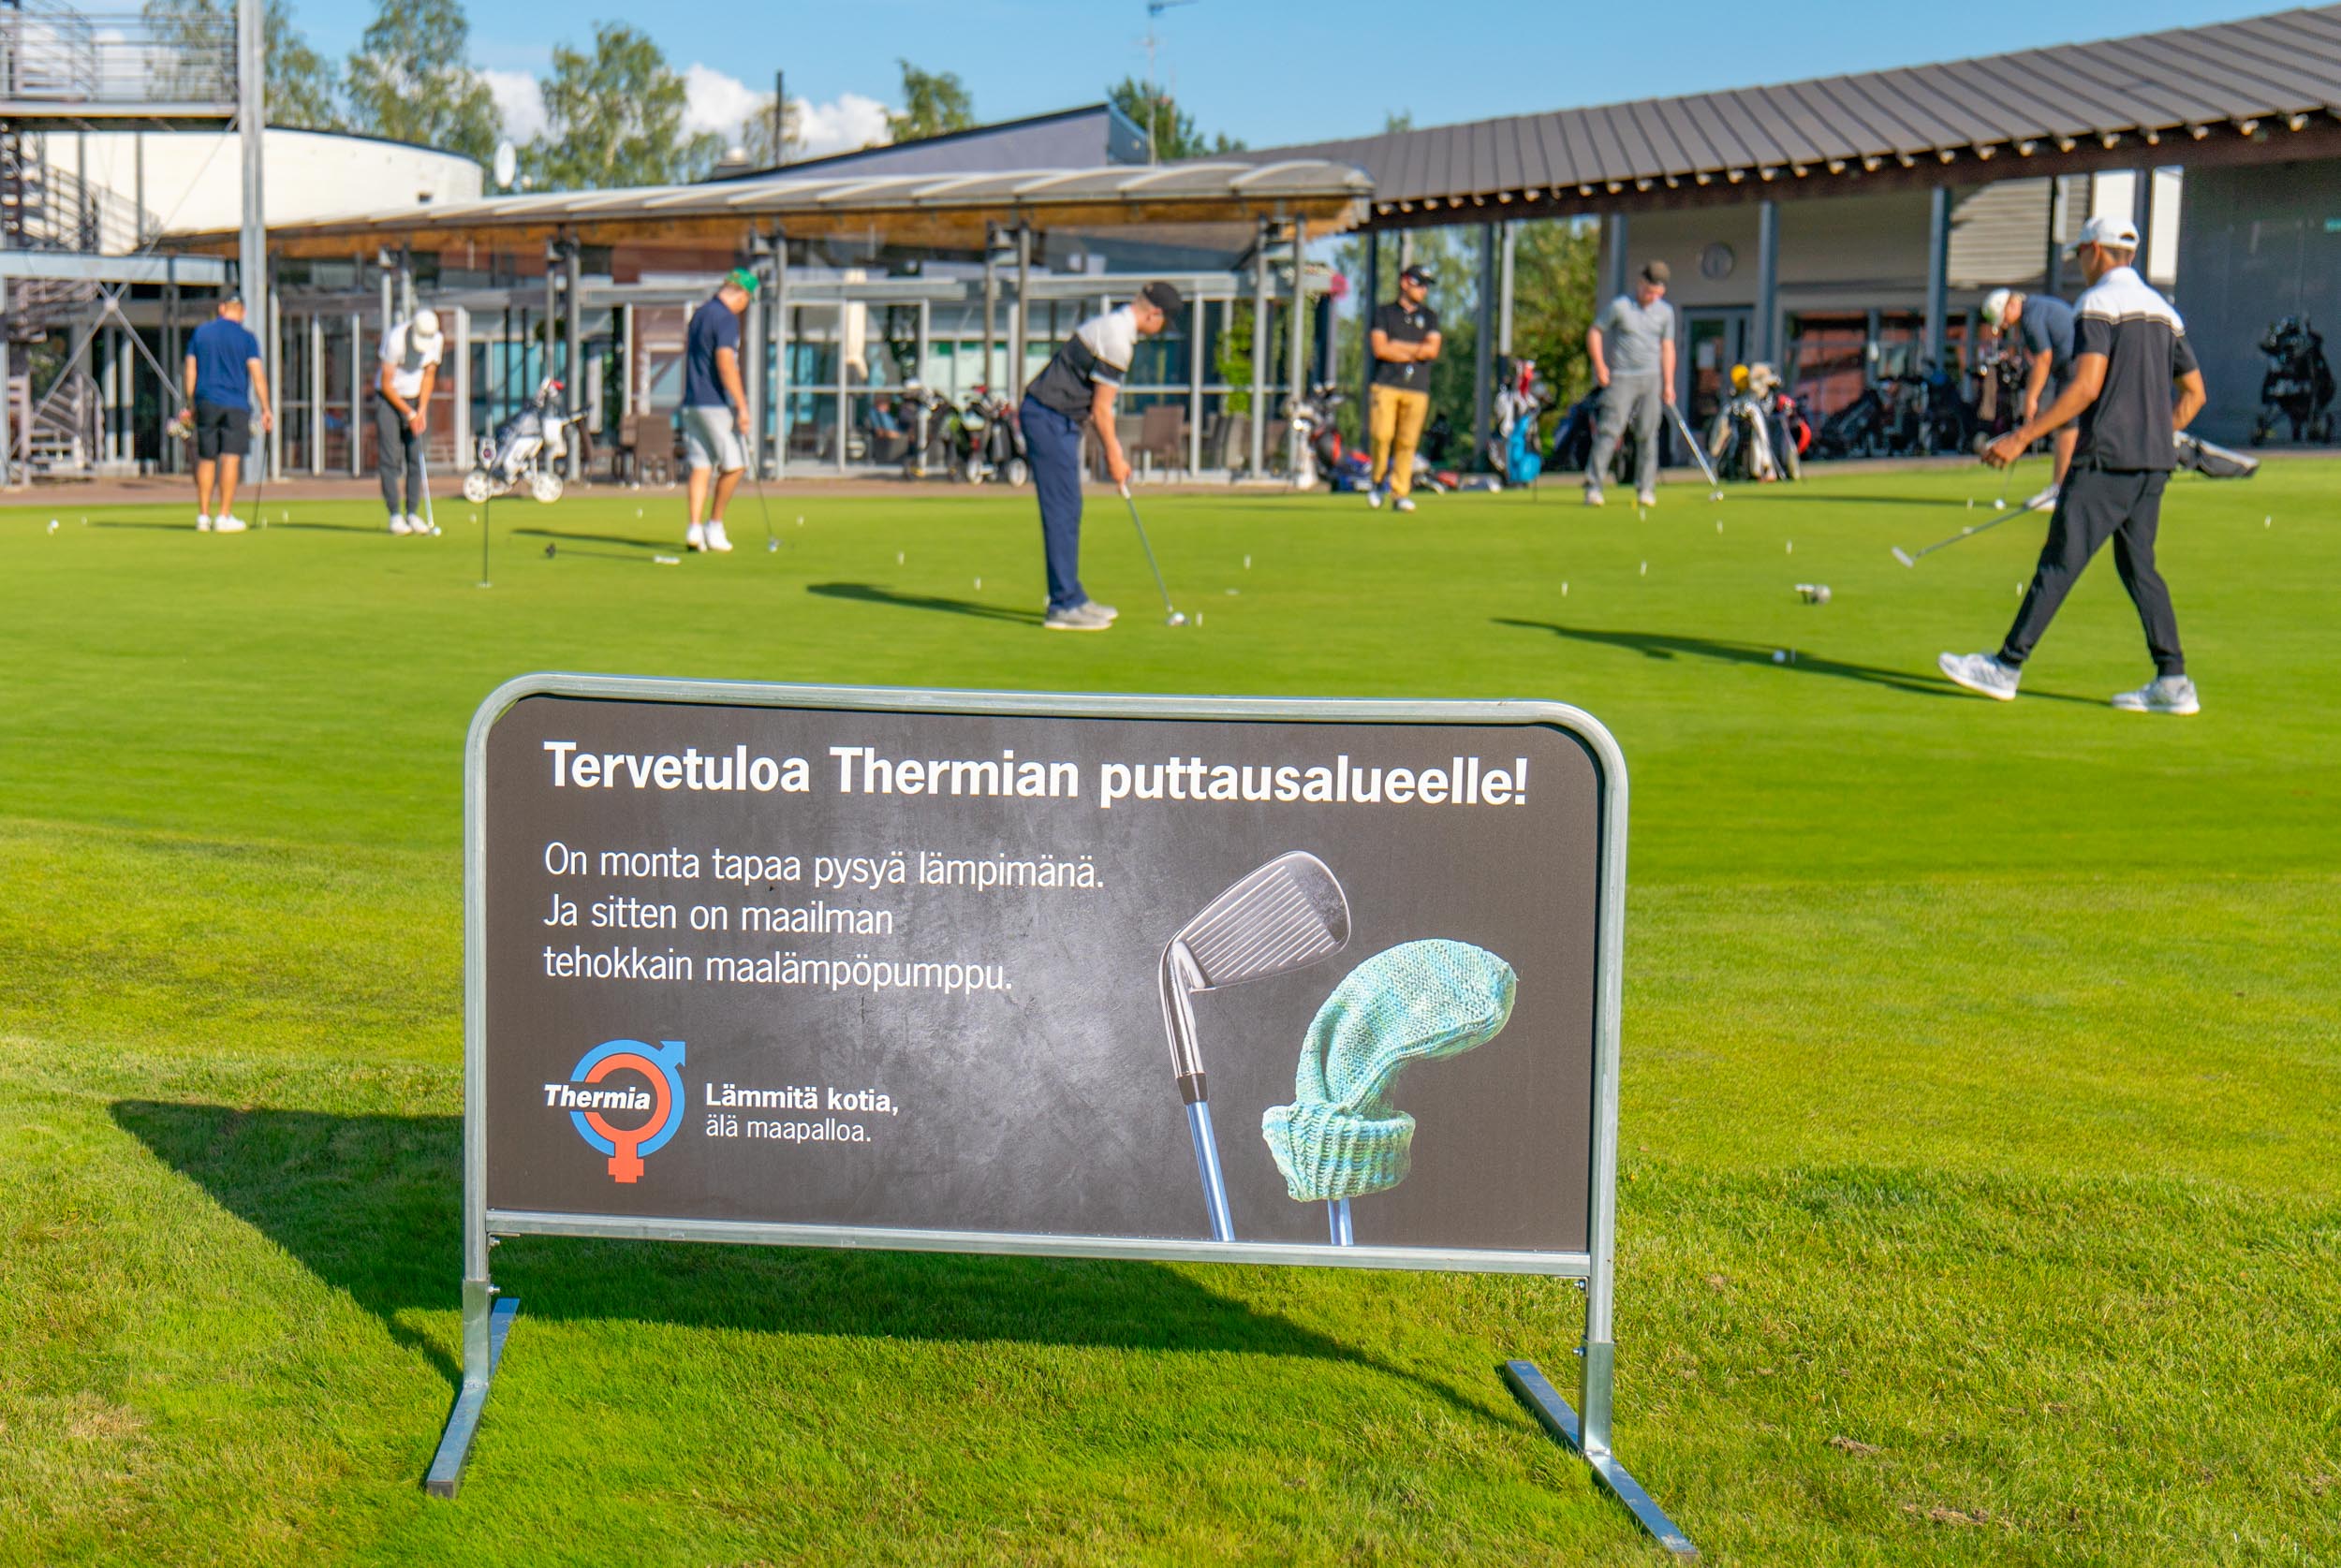 Thermia Talma golf vko 32 klubialuetaulu (4)